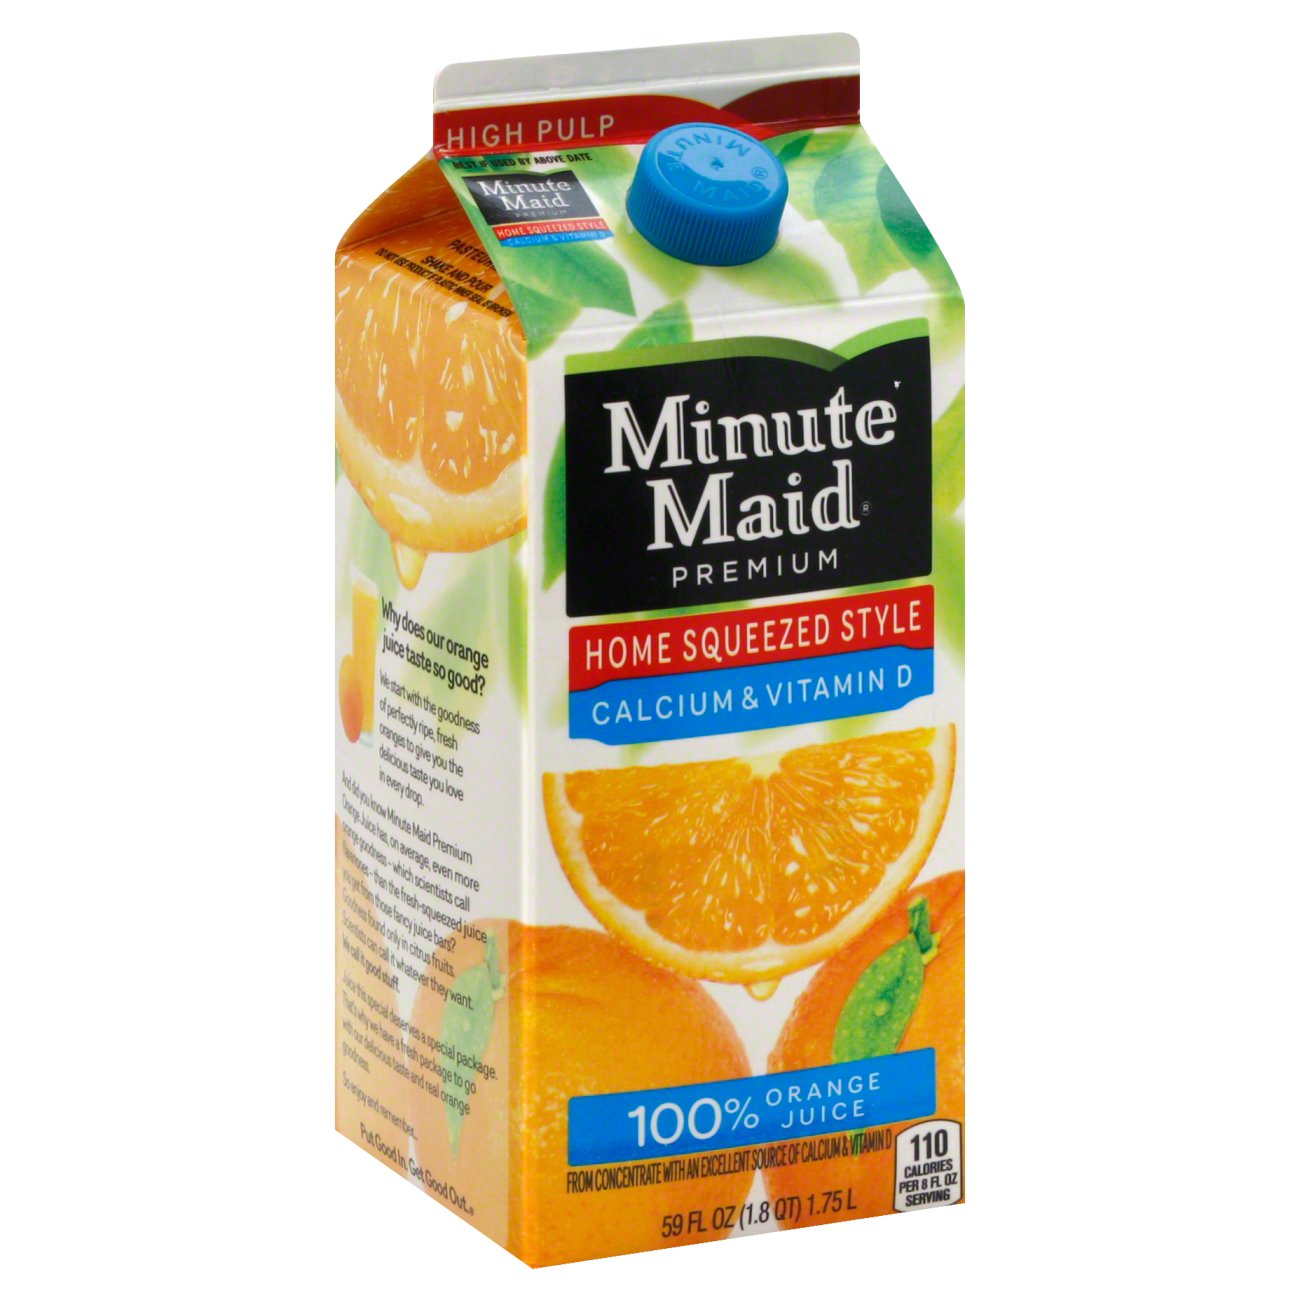 Minute Maid Premium Home Squeezed Style High Pulp 100% Orange Juice